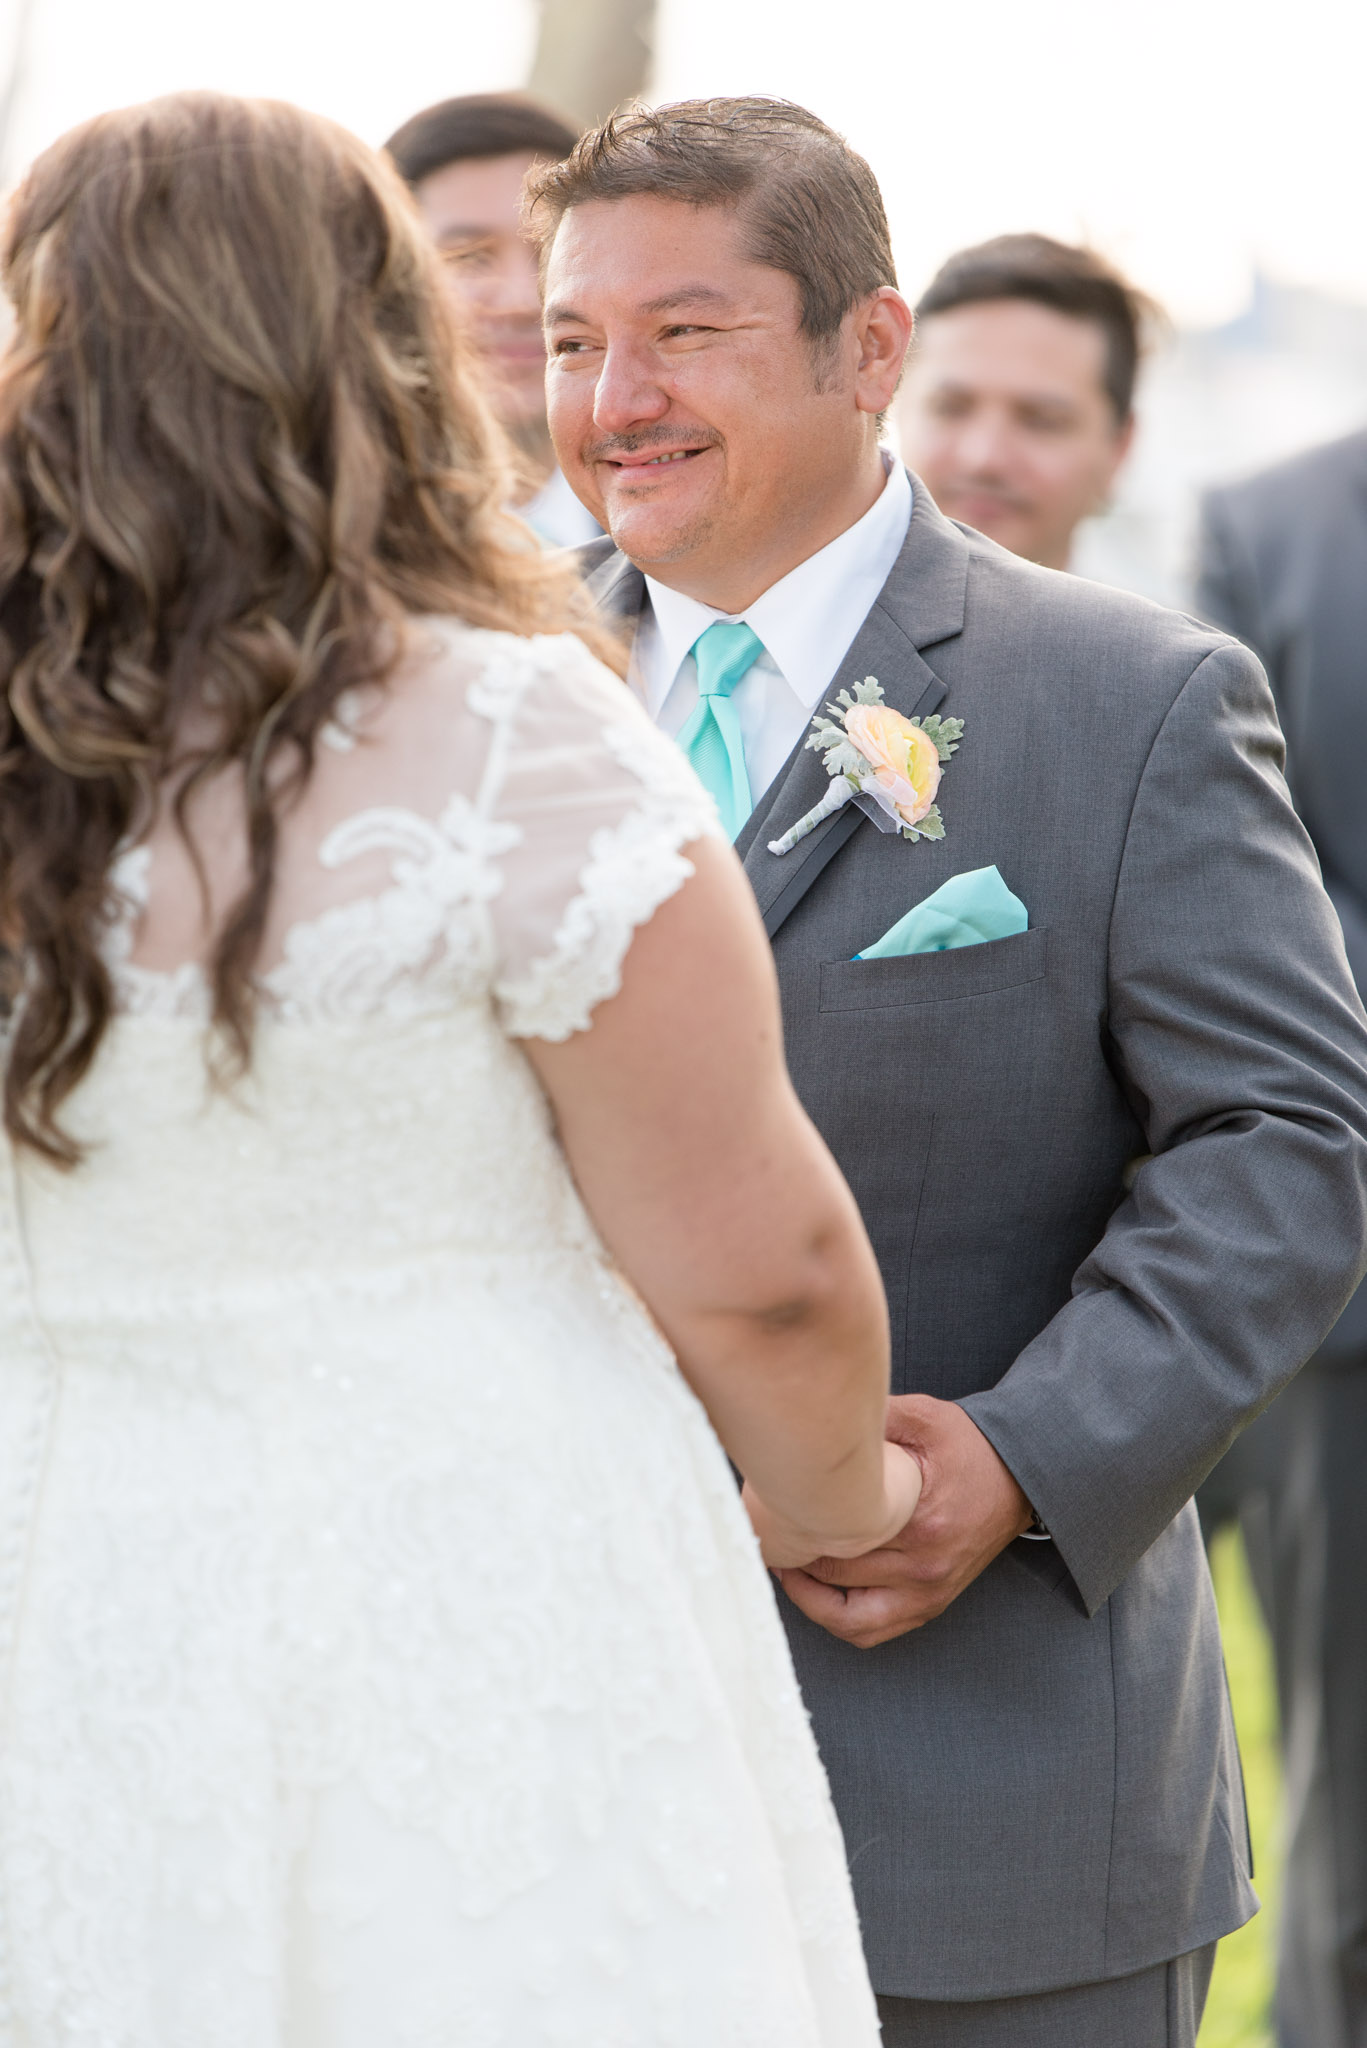 Groom smiles during wedding ceremony.